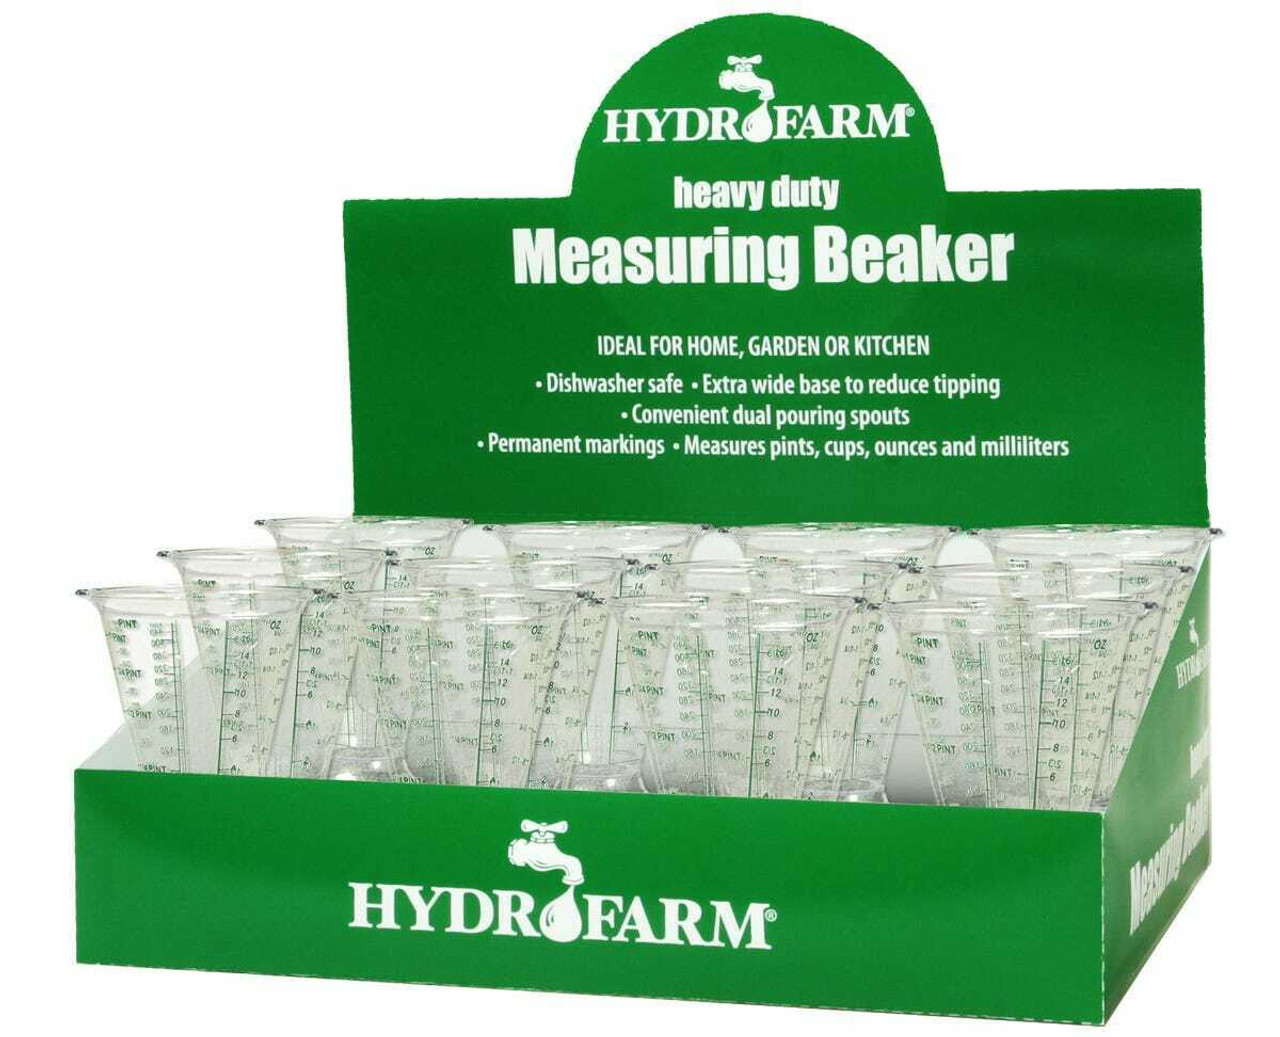 Hydrofarm Measuring Beaker, case of 12 - 1